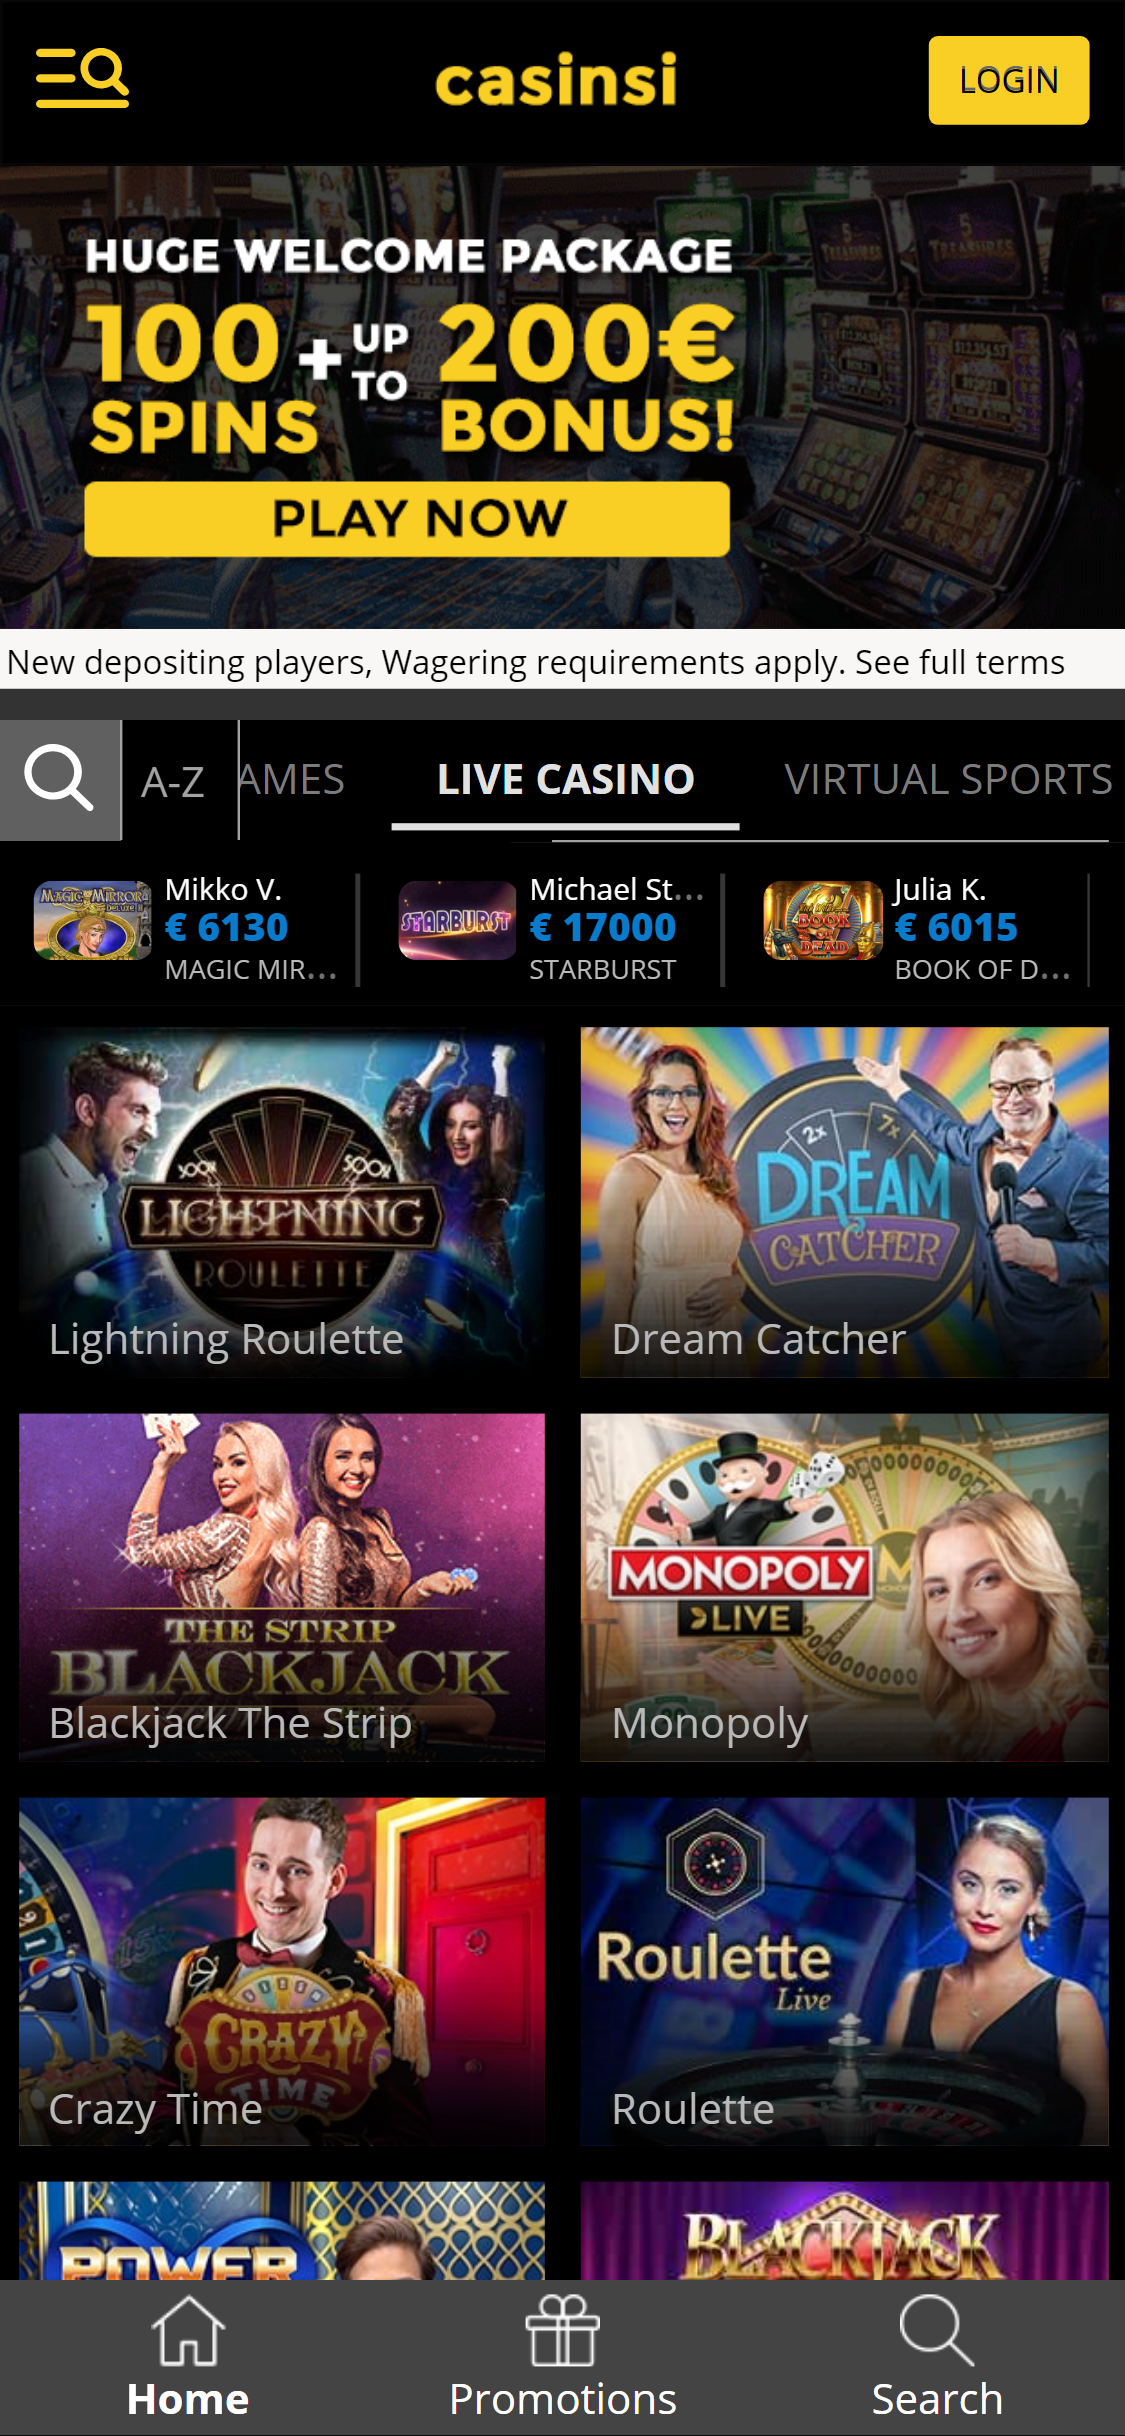 Casinsi Casino Mobile Live Dealer Games Review